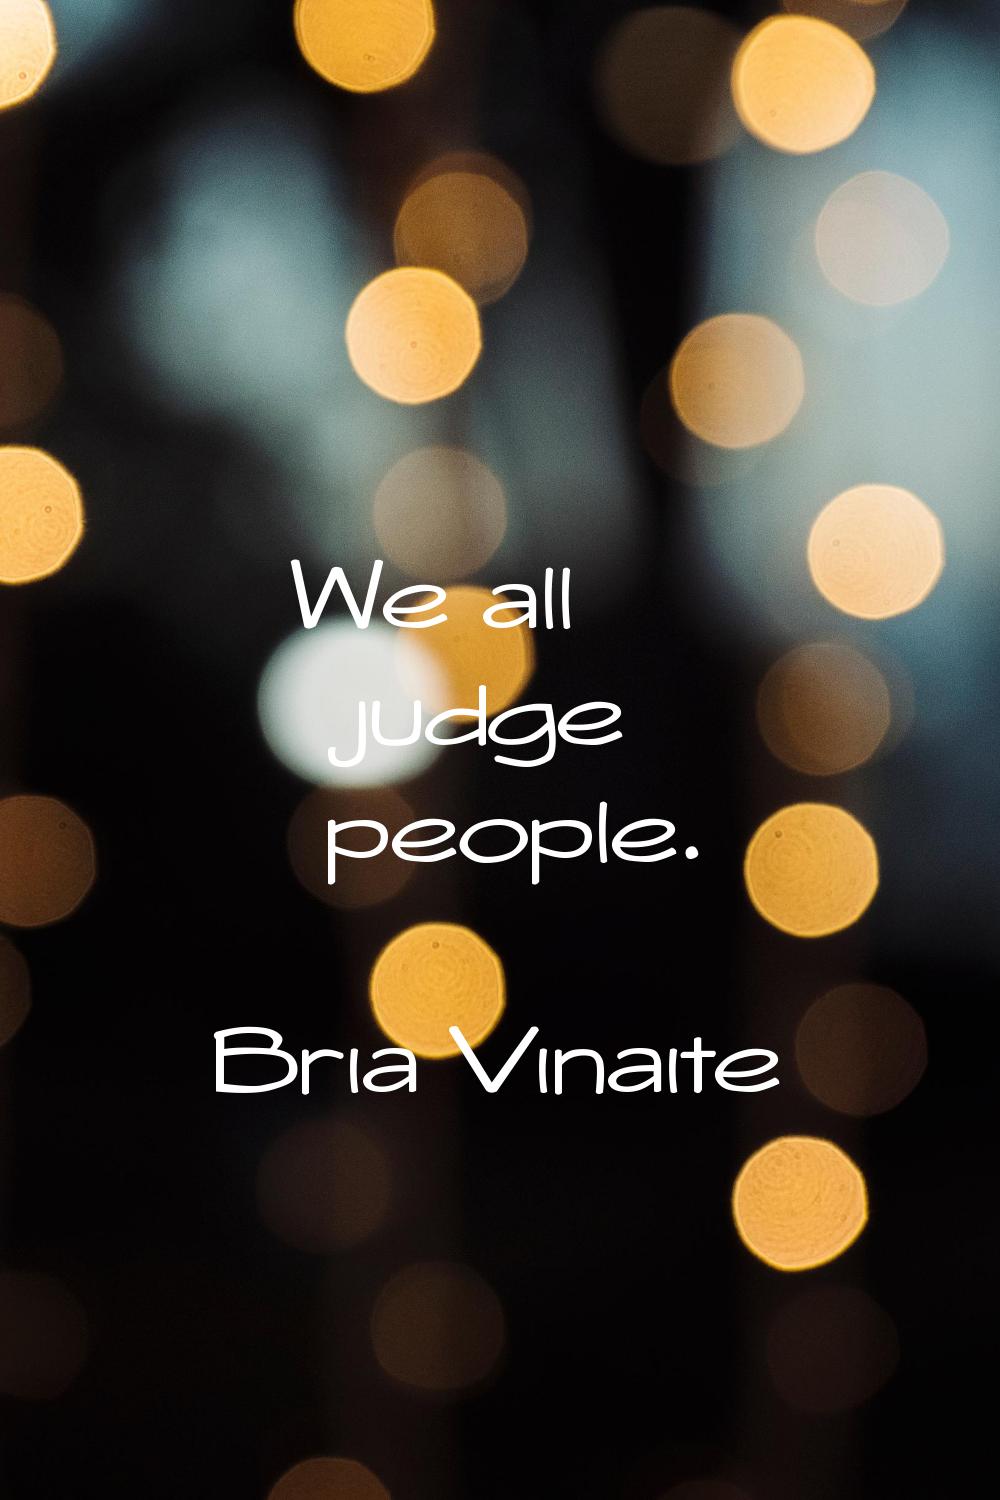 We all judge people.